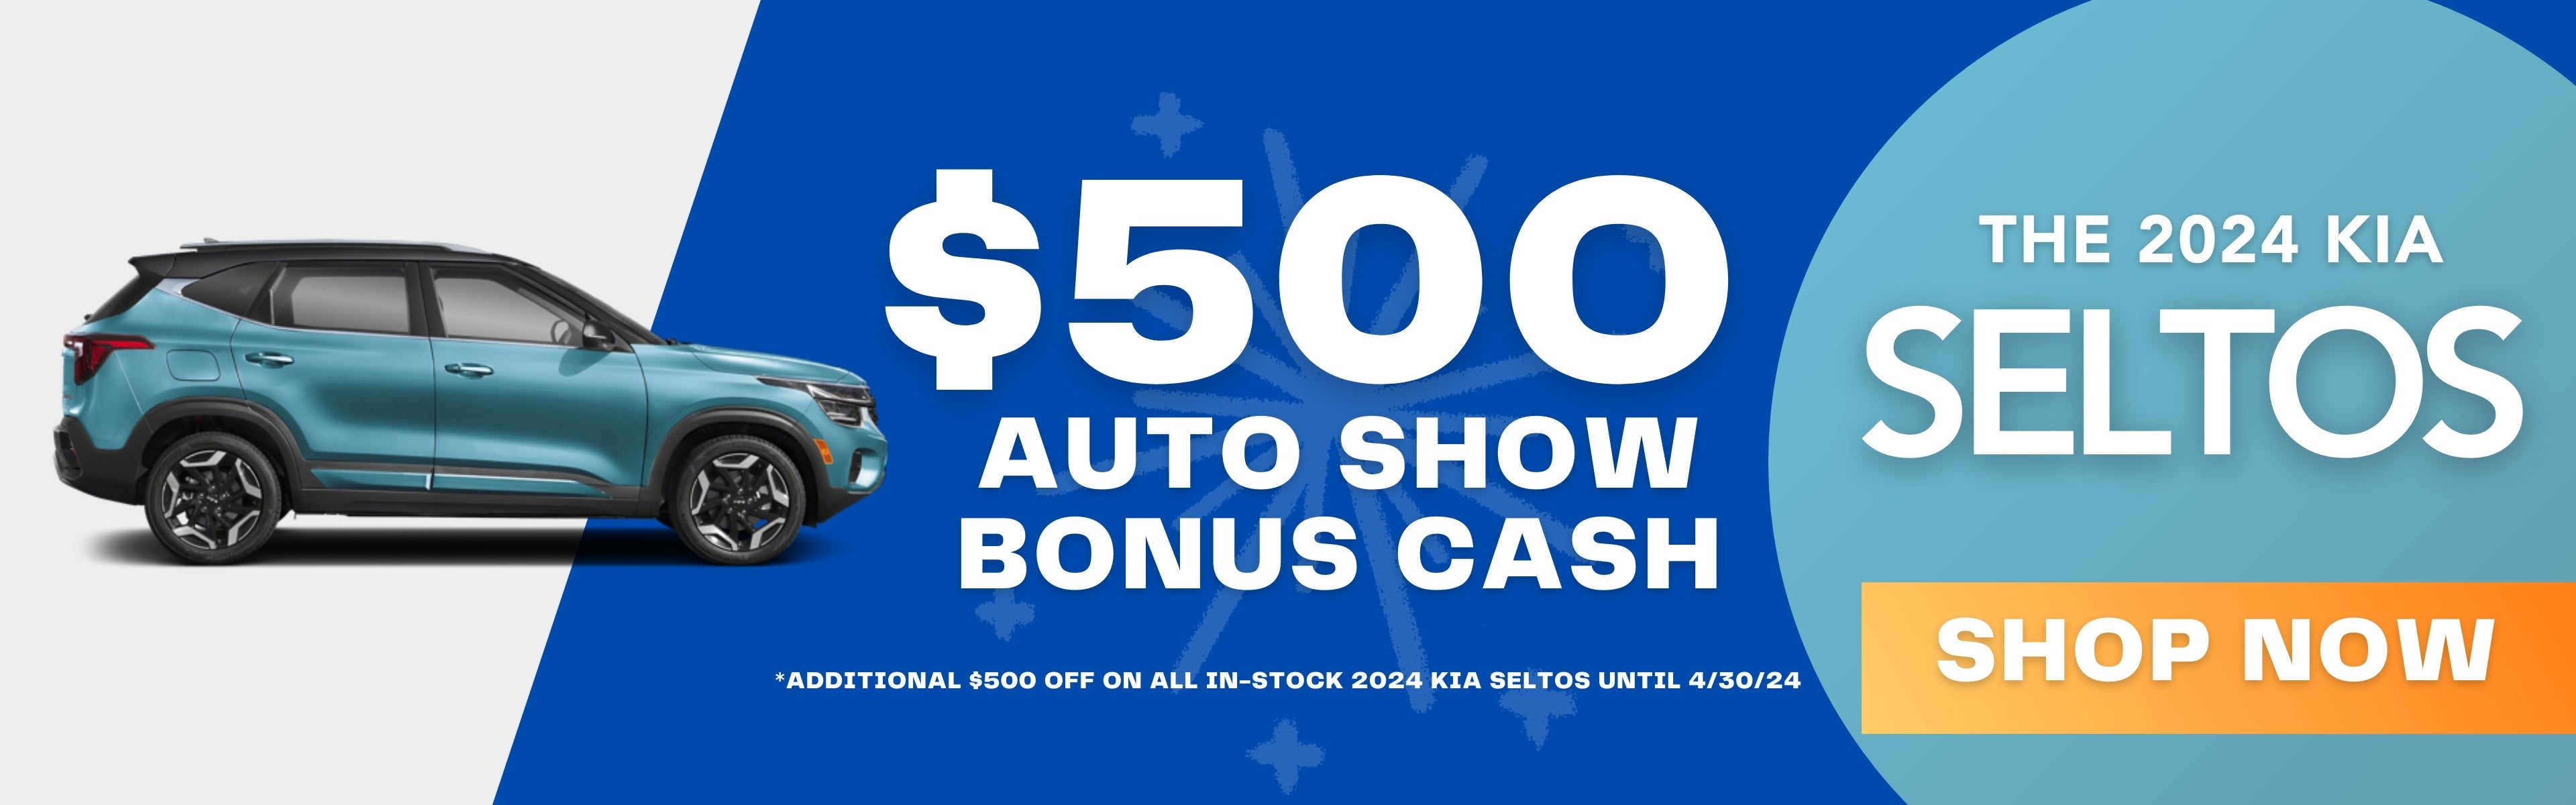 Seltos Auto Show Bonus Cash